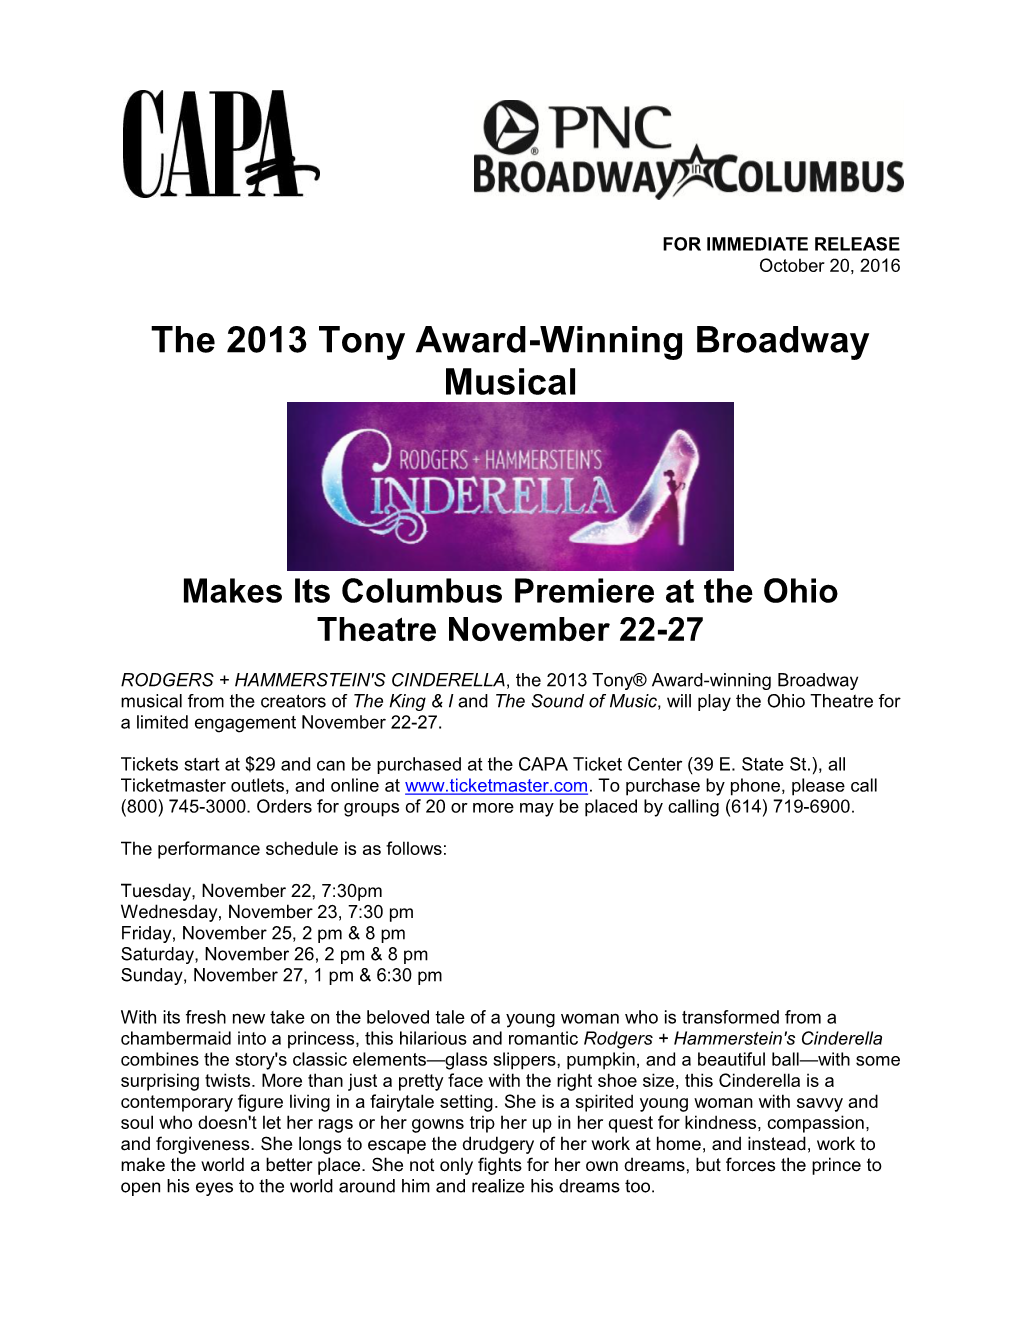 The 2013 Tony Award-Winning Broadway Musical